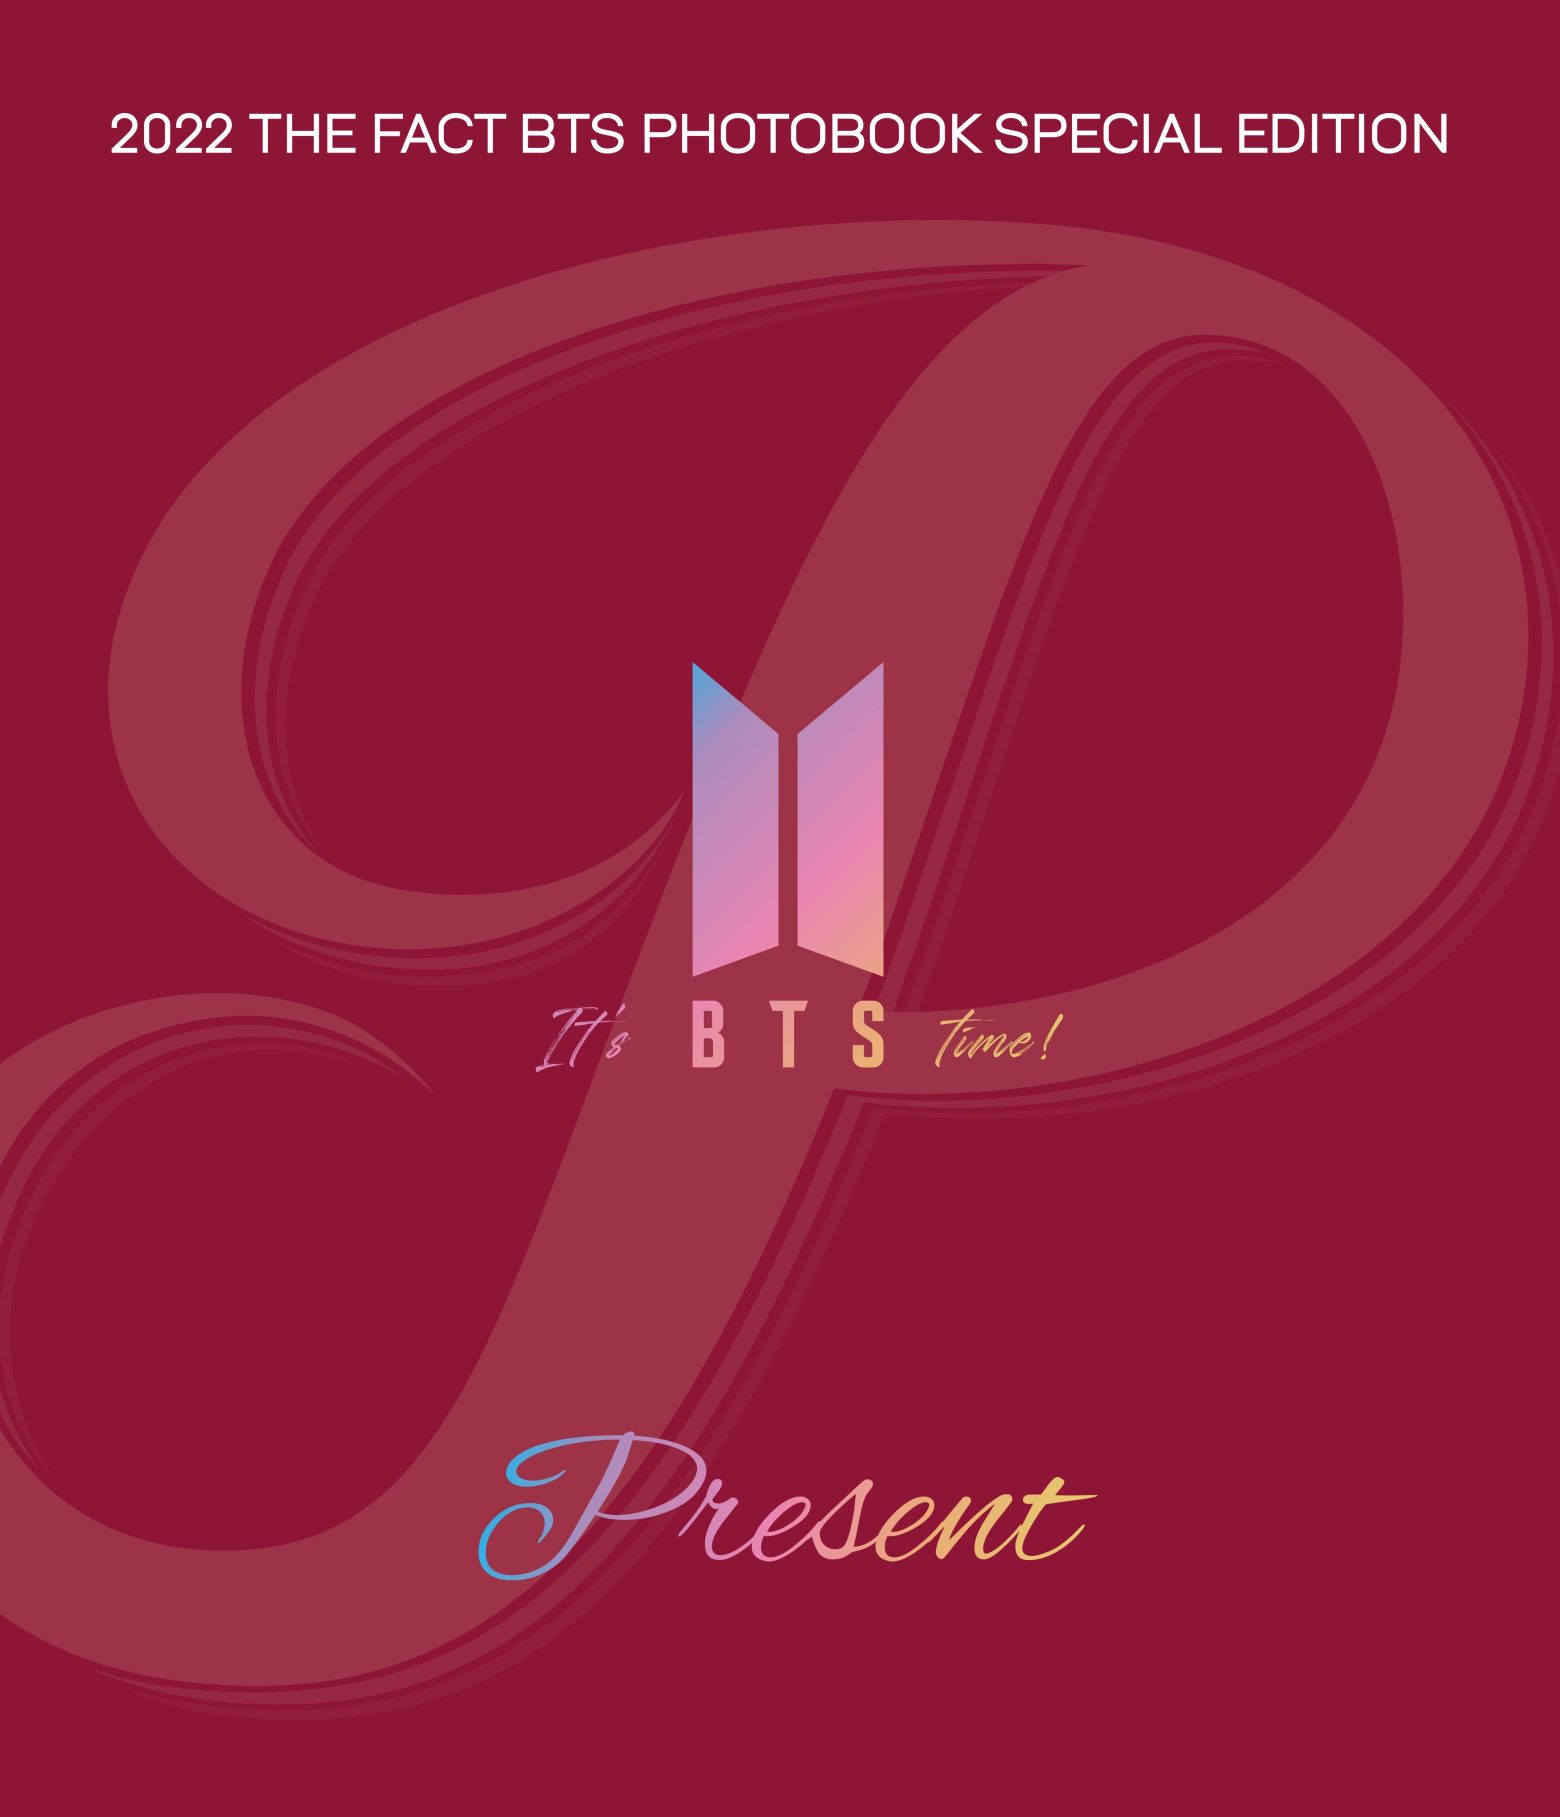 BTS、写真集『2022 THE FACT BTS PHOTOBOOK SPECIAL EDITION』売れ行き好調  約1か月後には予約販売を締め切る見通し | Musicman